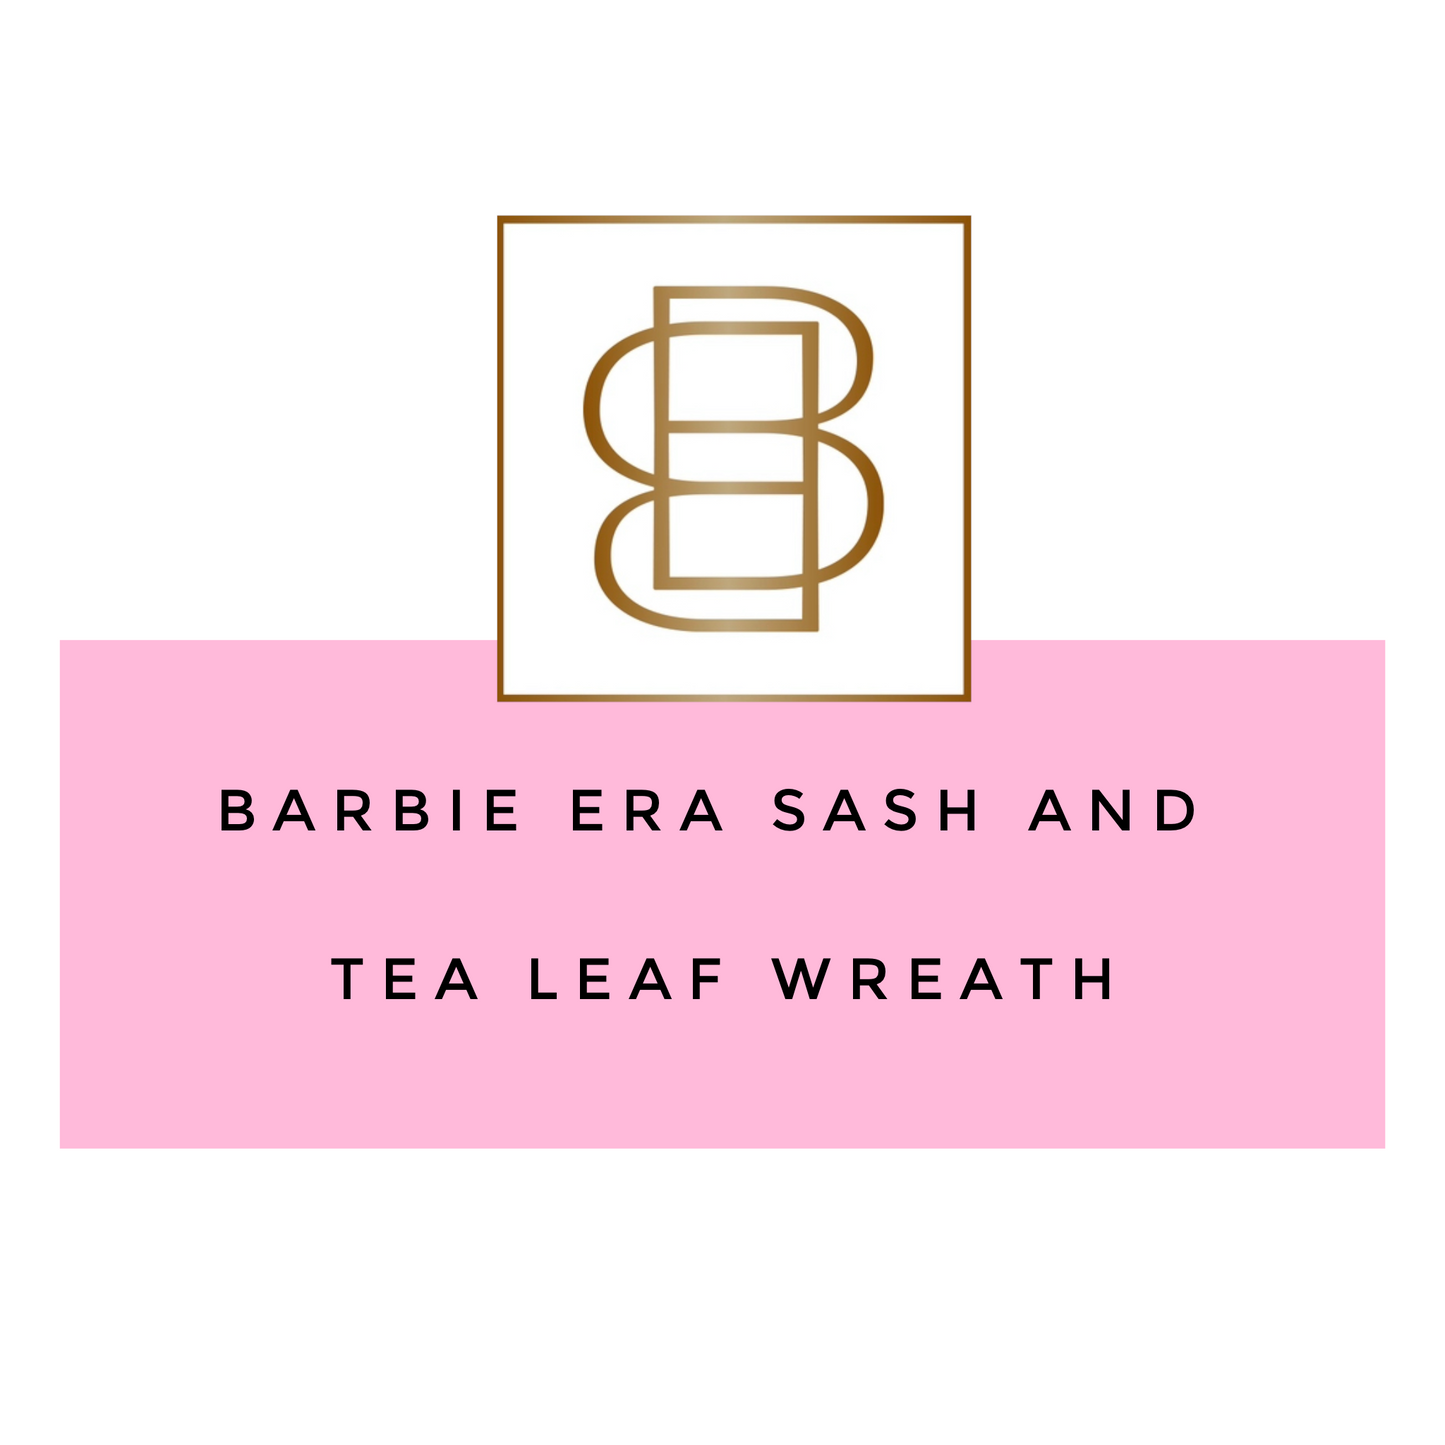 The Barbie Era Sash And Tea Leaf Wreath